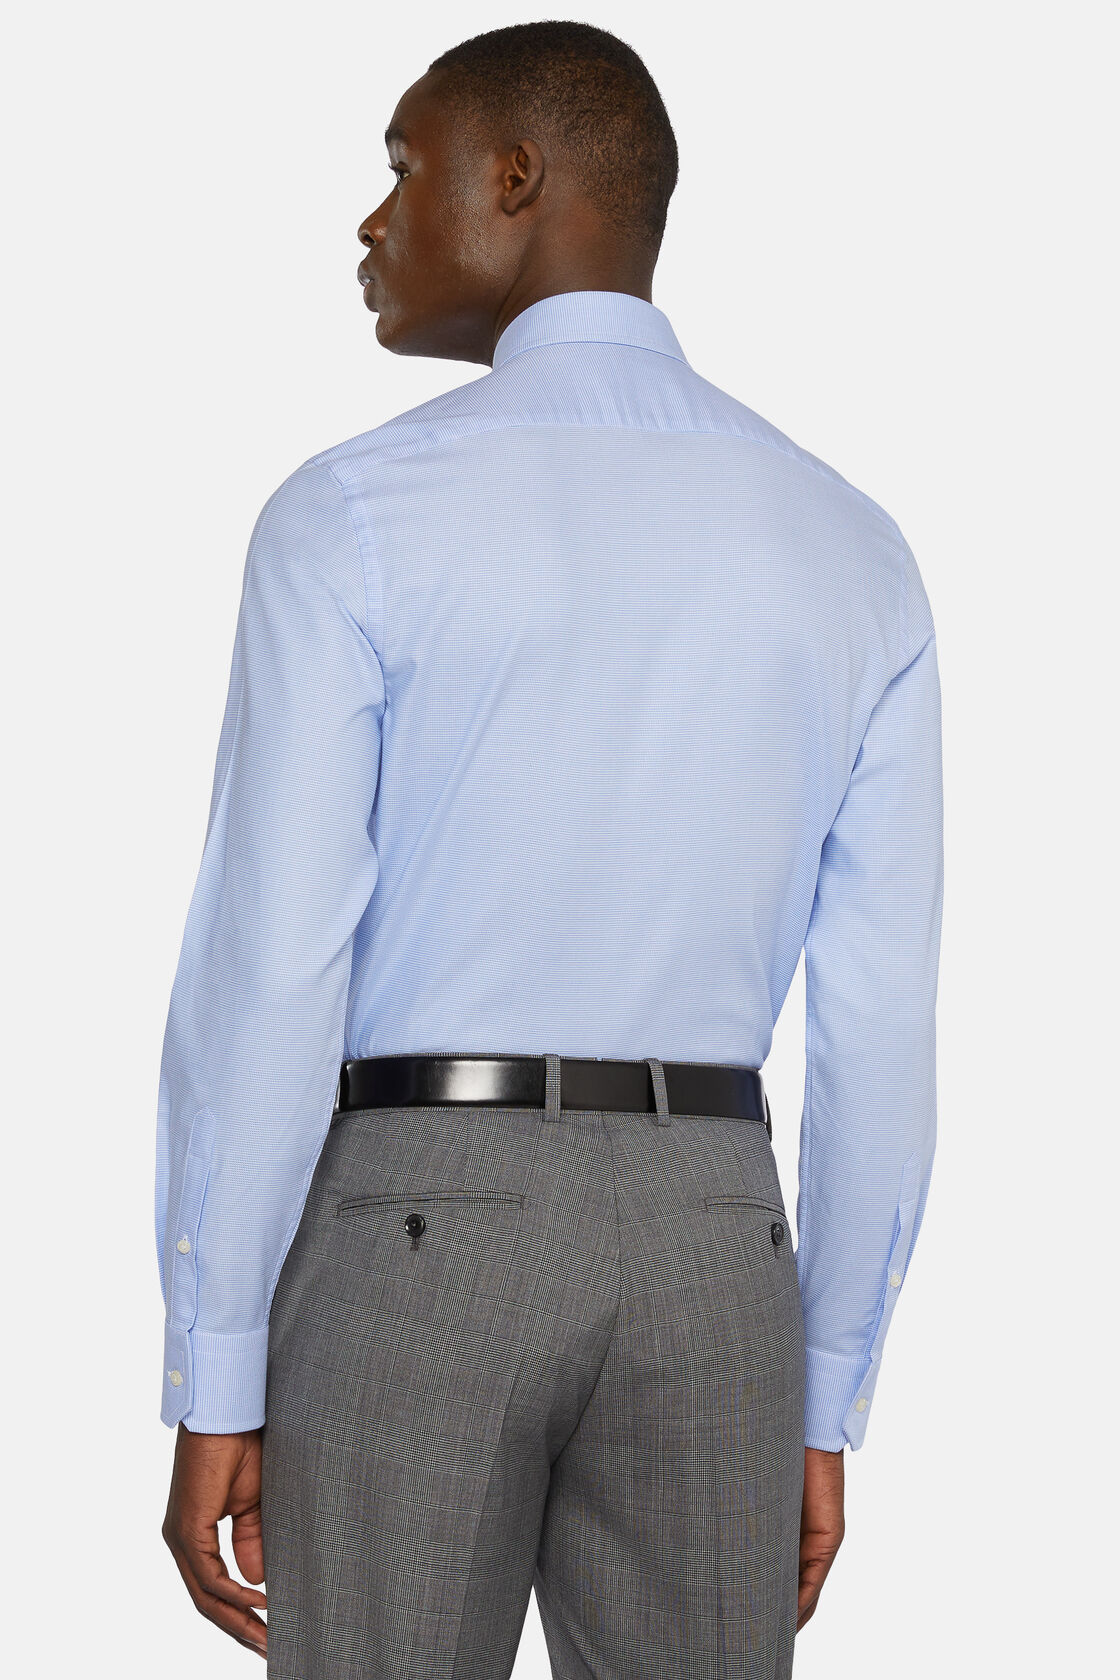 Hemelsblauw slim-fit katoenen shirt met pied-de-poule, Light Blue, hi-res